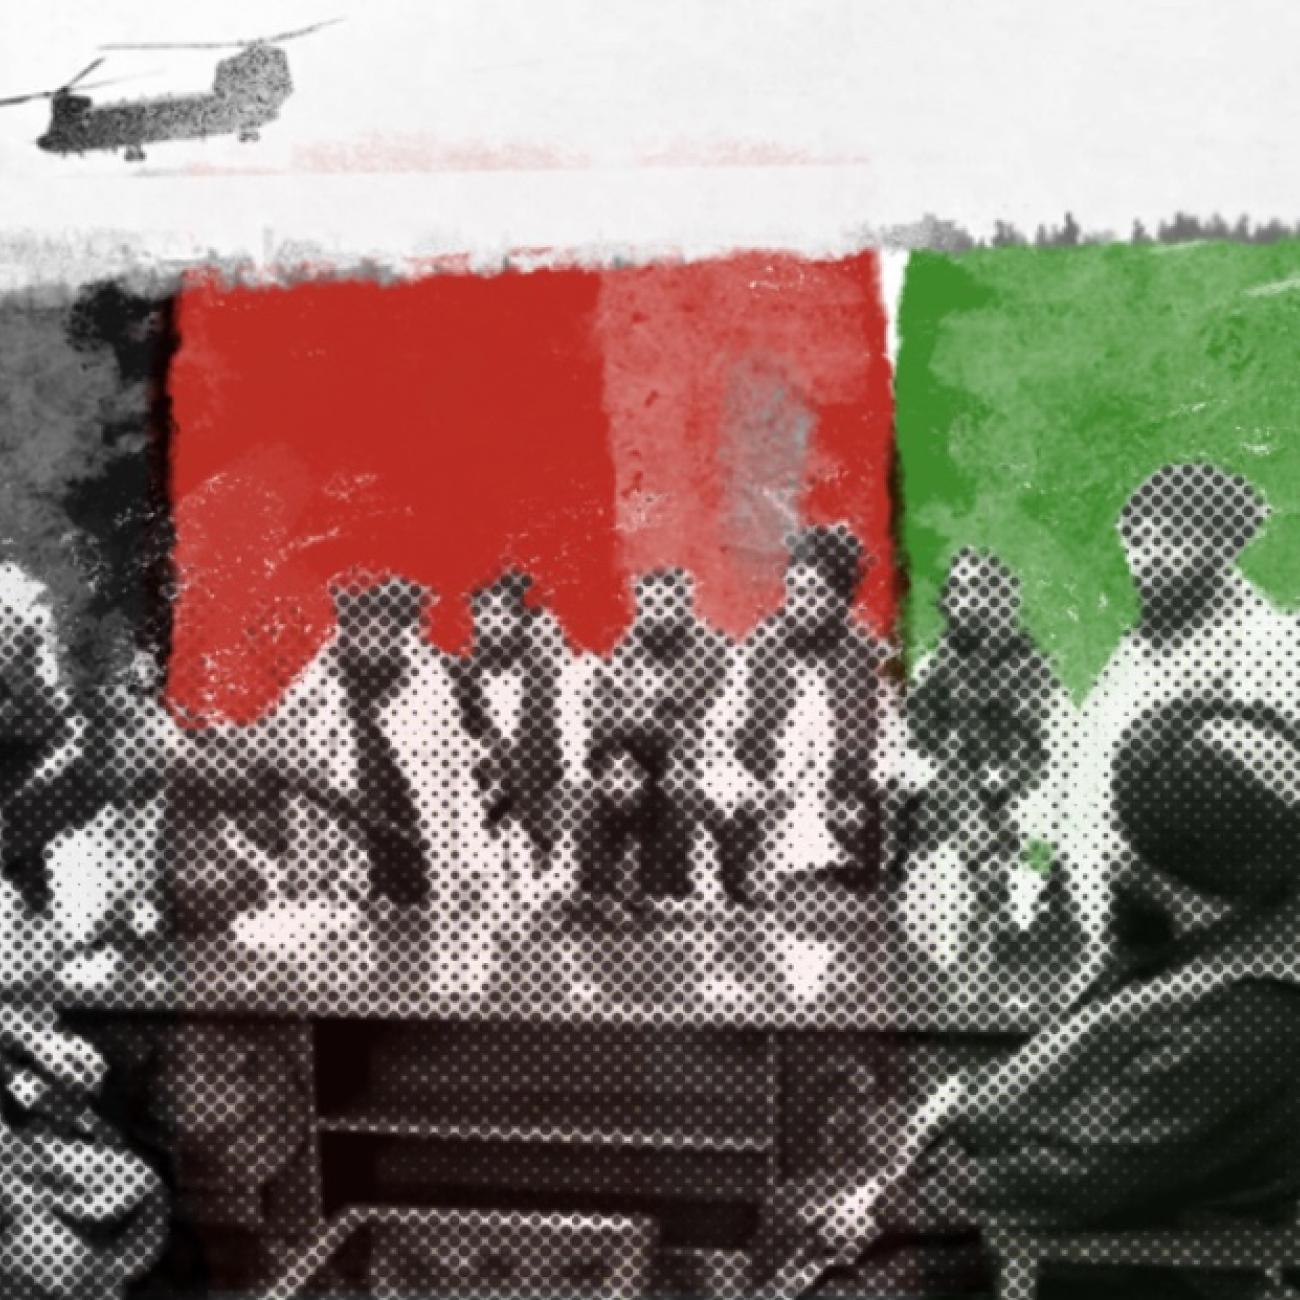 Taliban members gathered around a desk